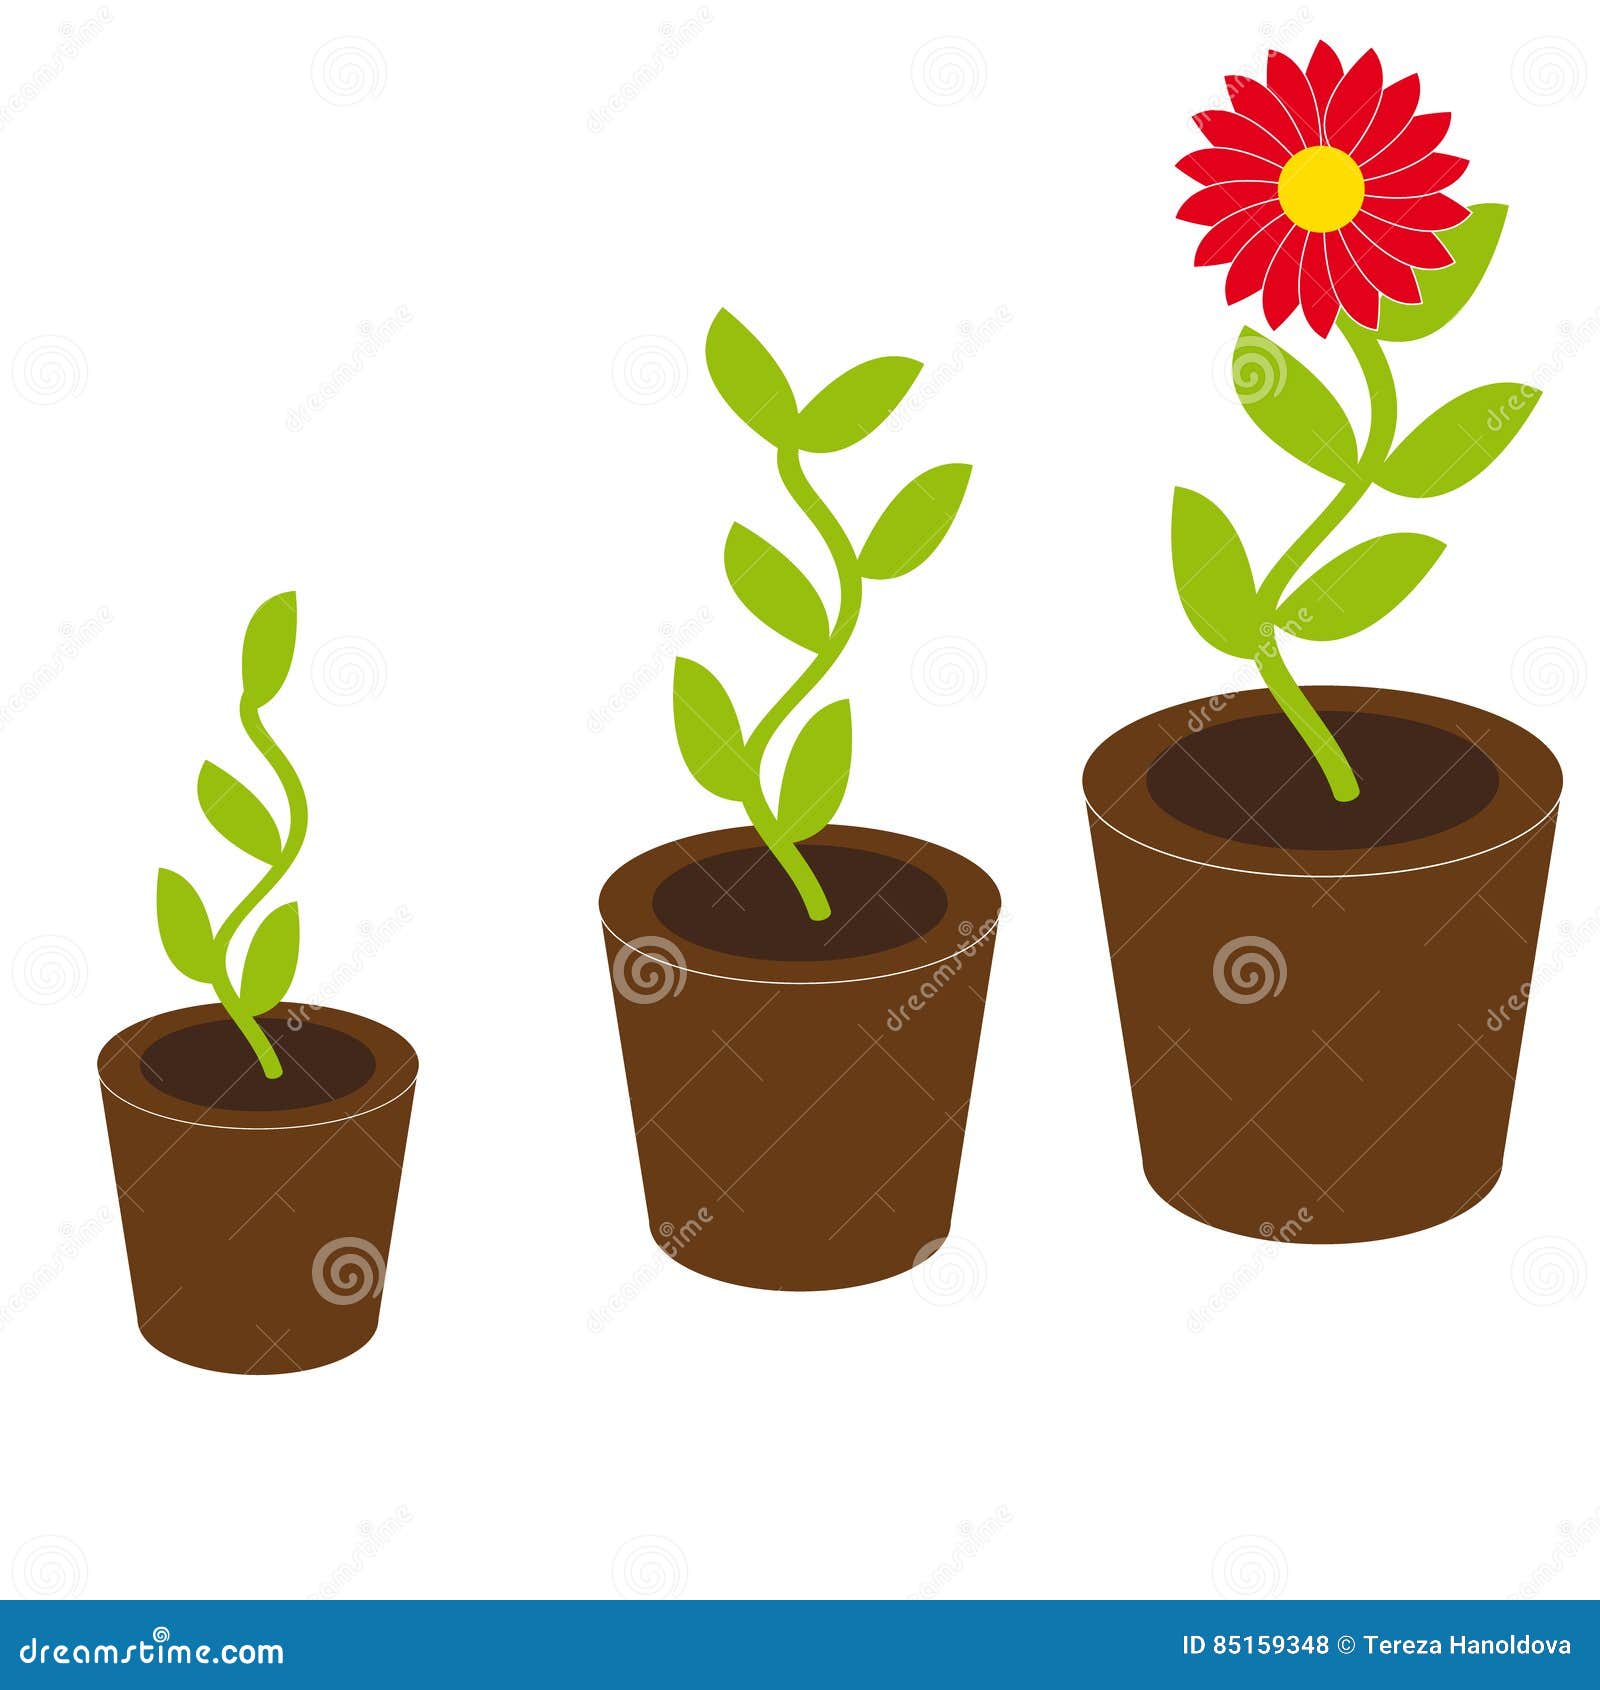 Growing Flower on White Background Stock Vector - Illustration of ...